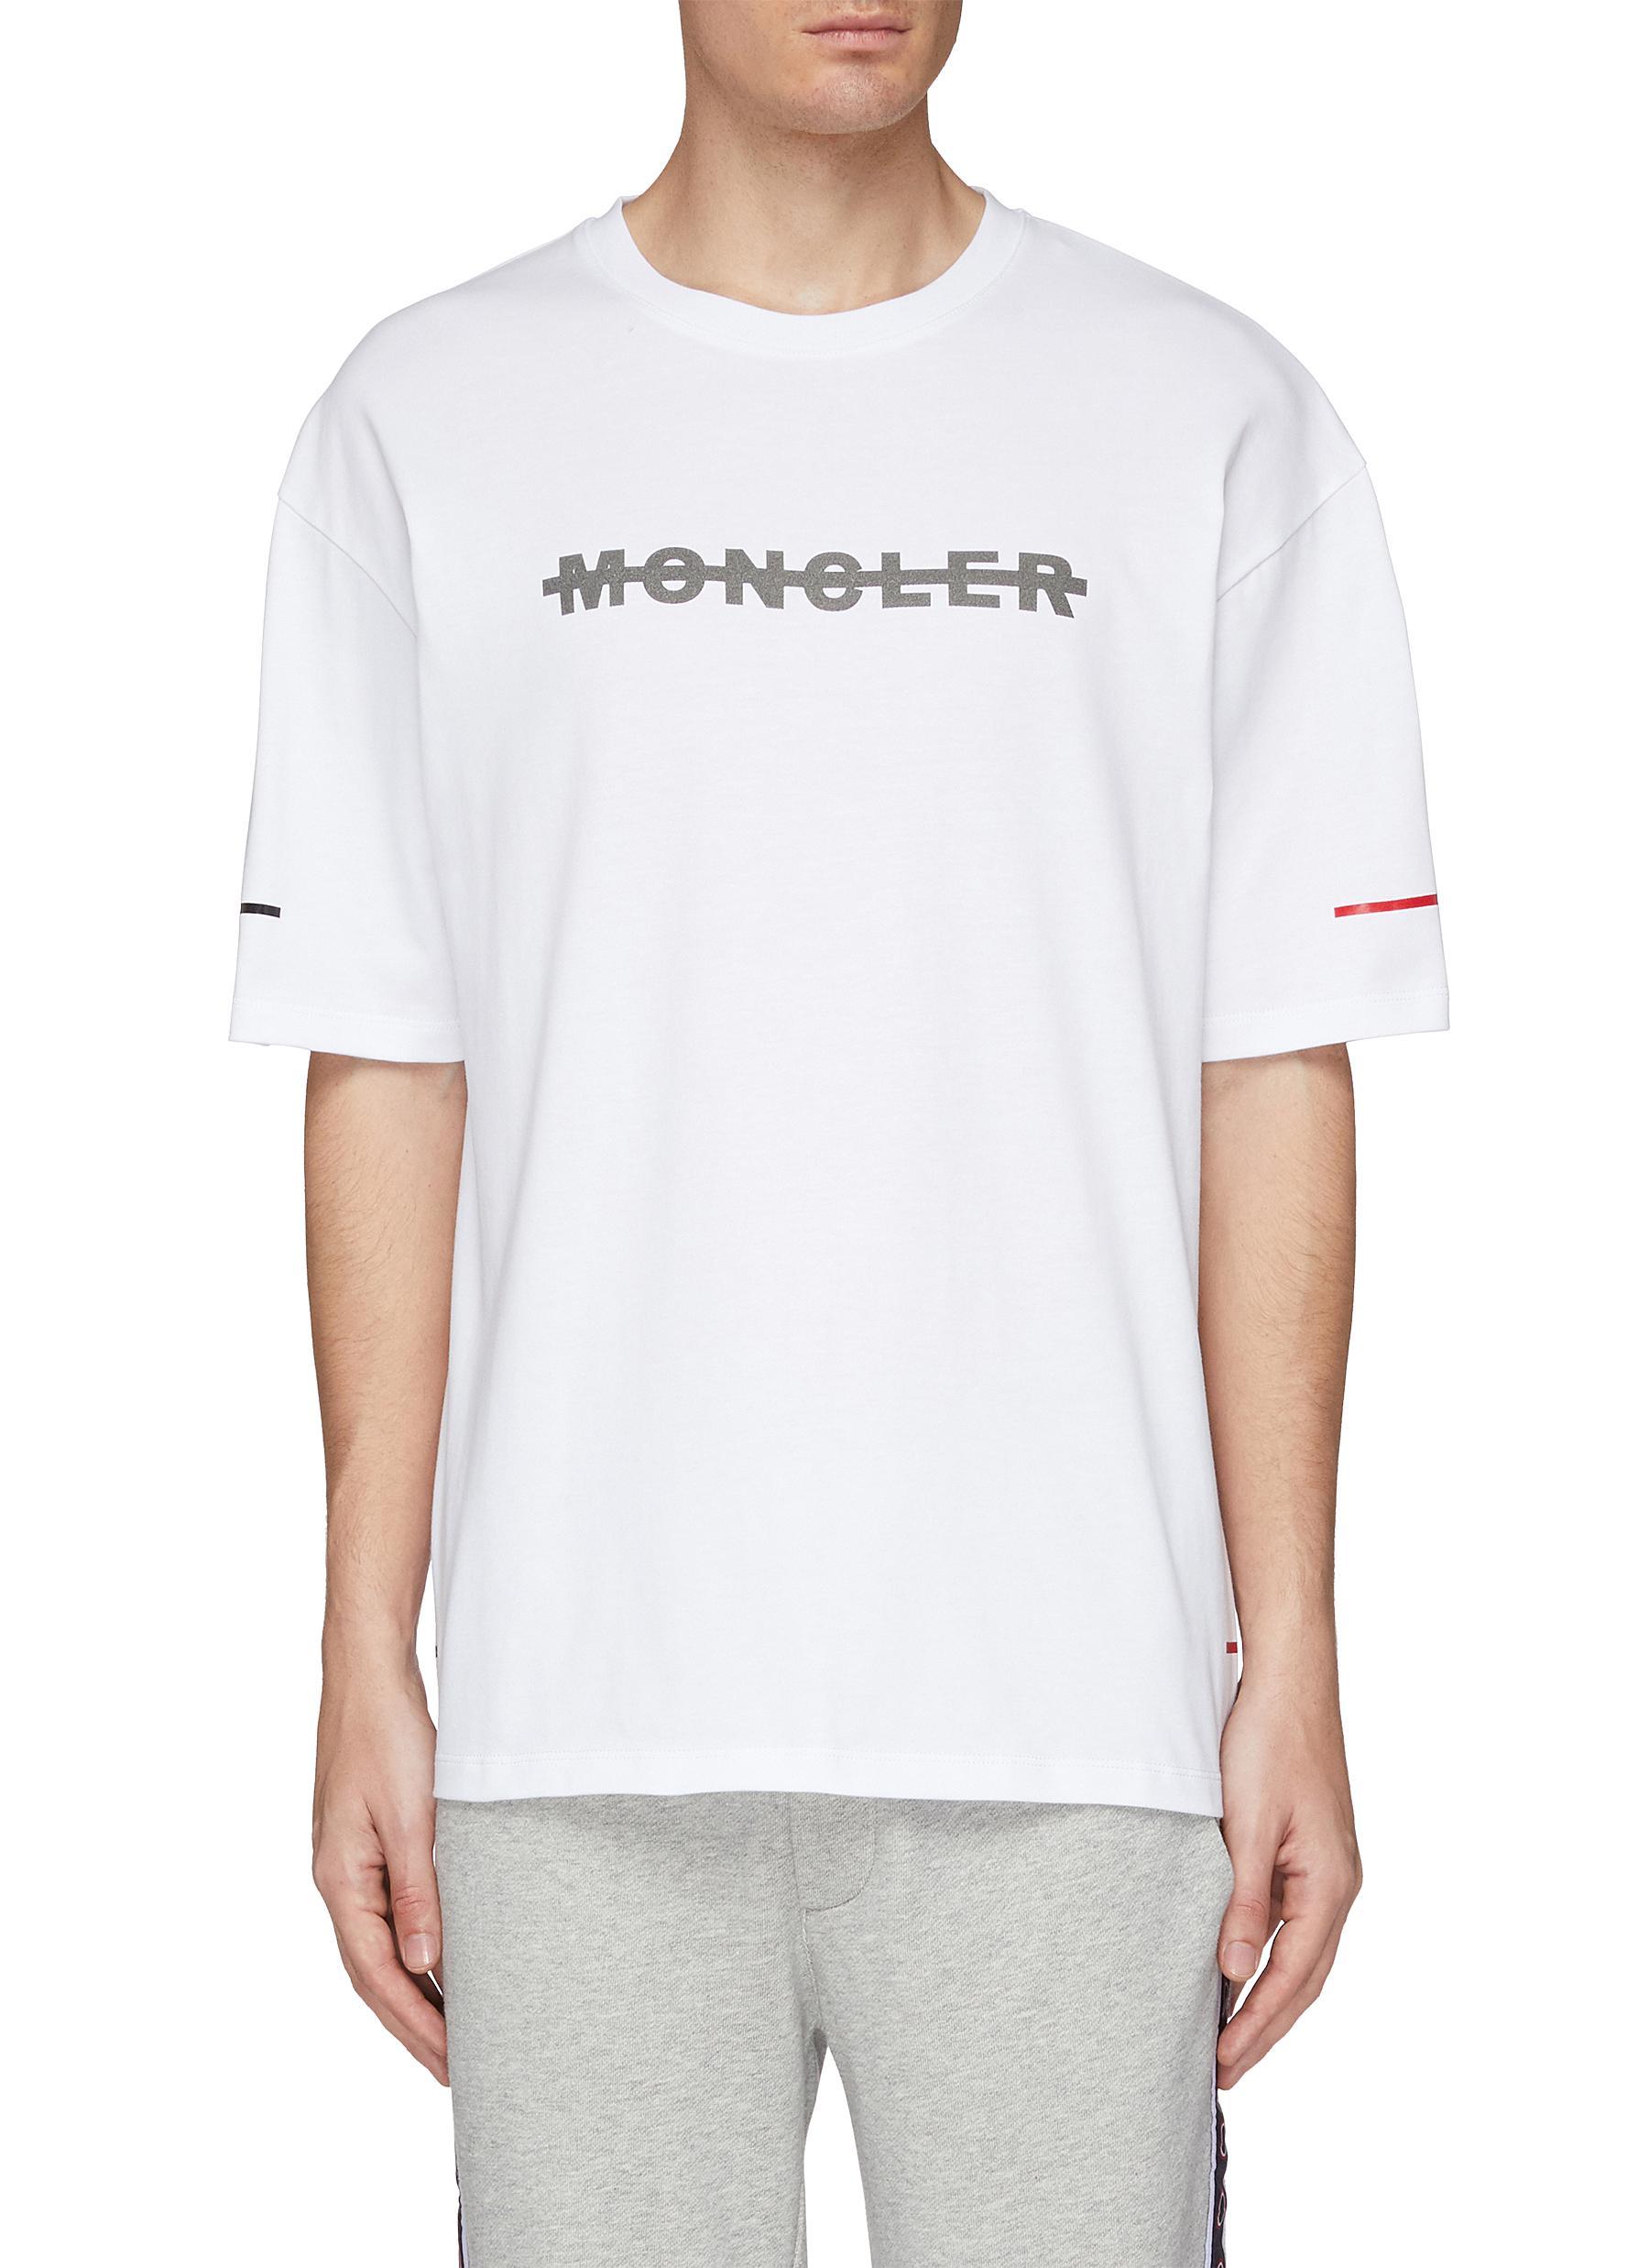 Moncler Cotton 'maglia' Logo Print T-shirt in White for Men - Save 40% ...